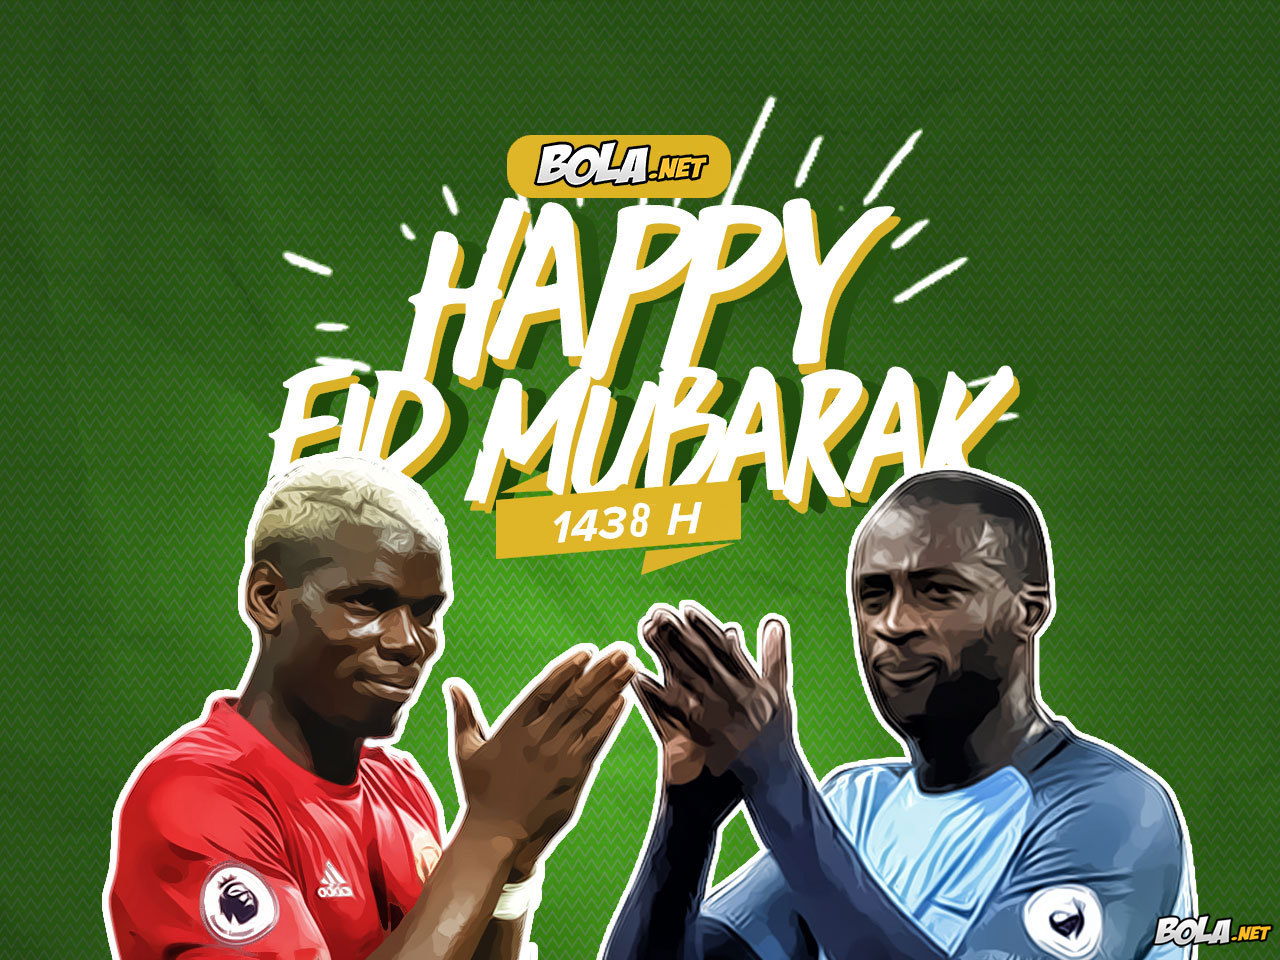 Deskripsi : Wallpaper Happy Eid Mubarak 1838 H, size: 1280x960